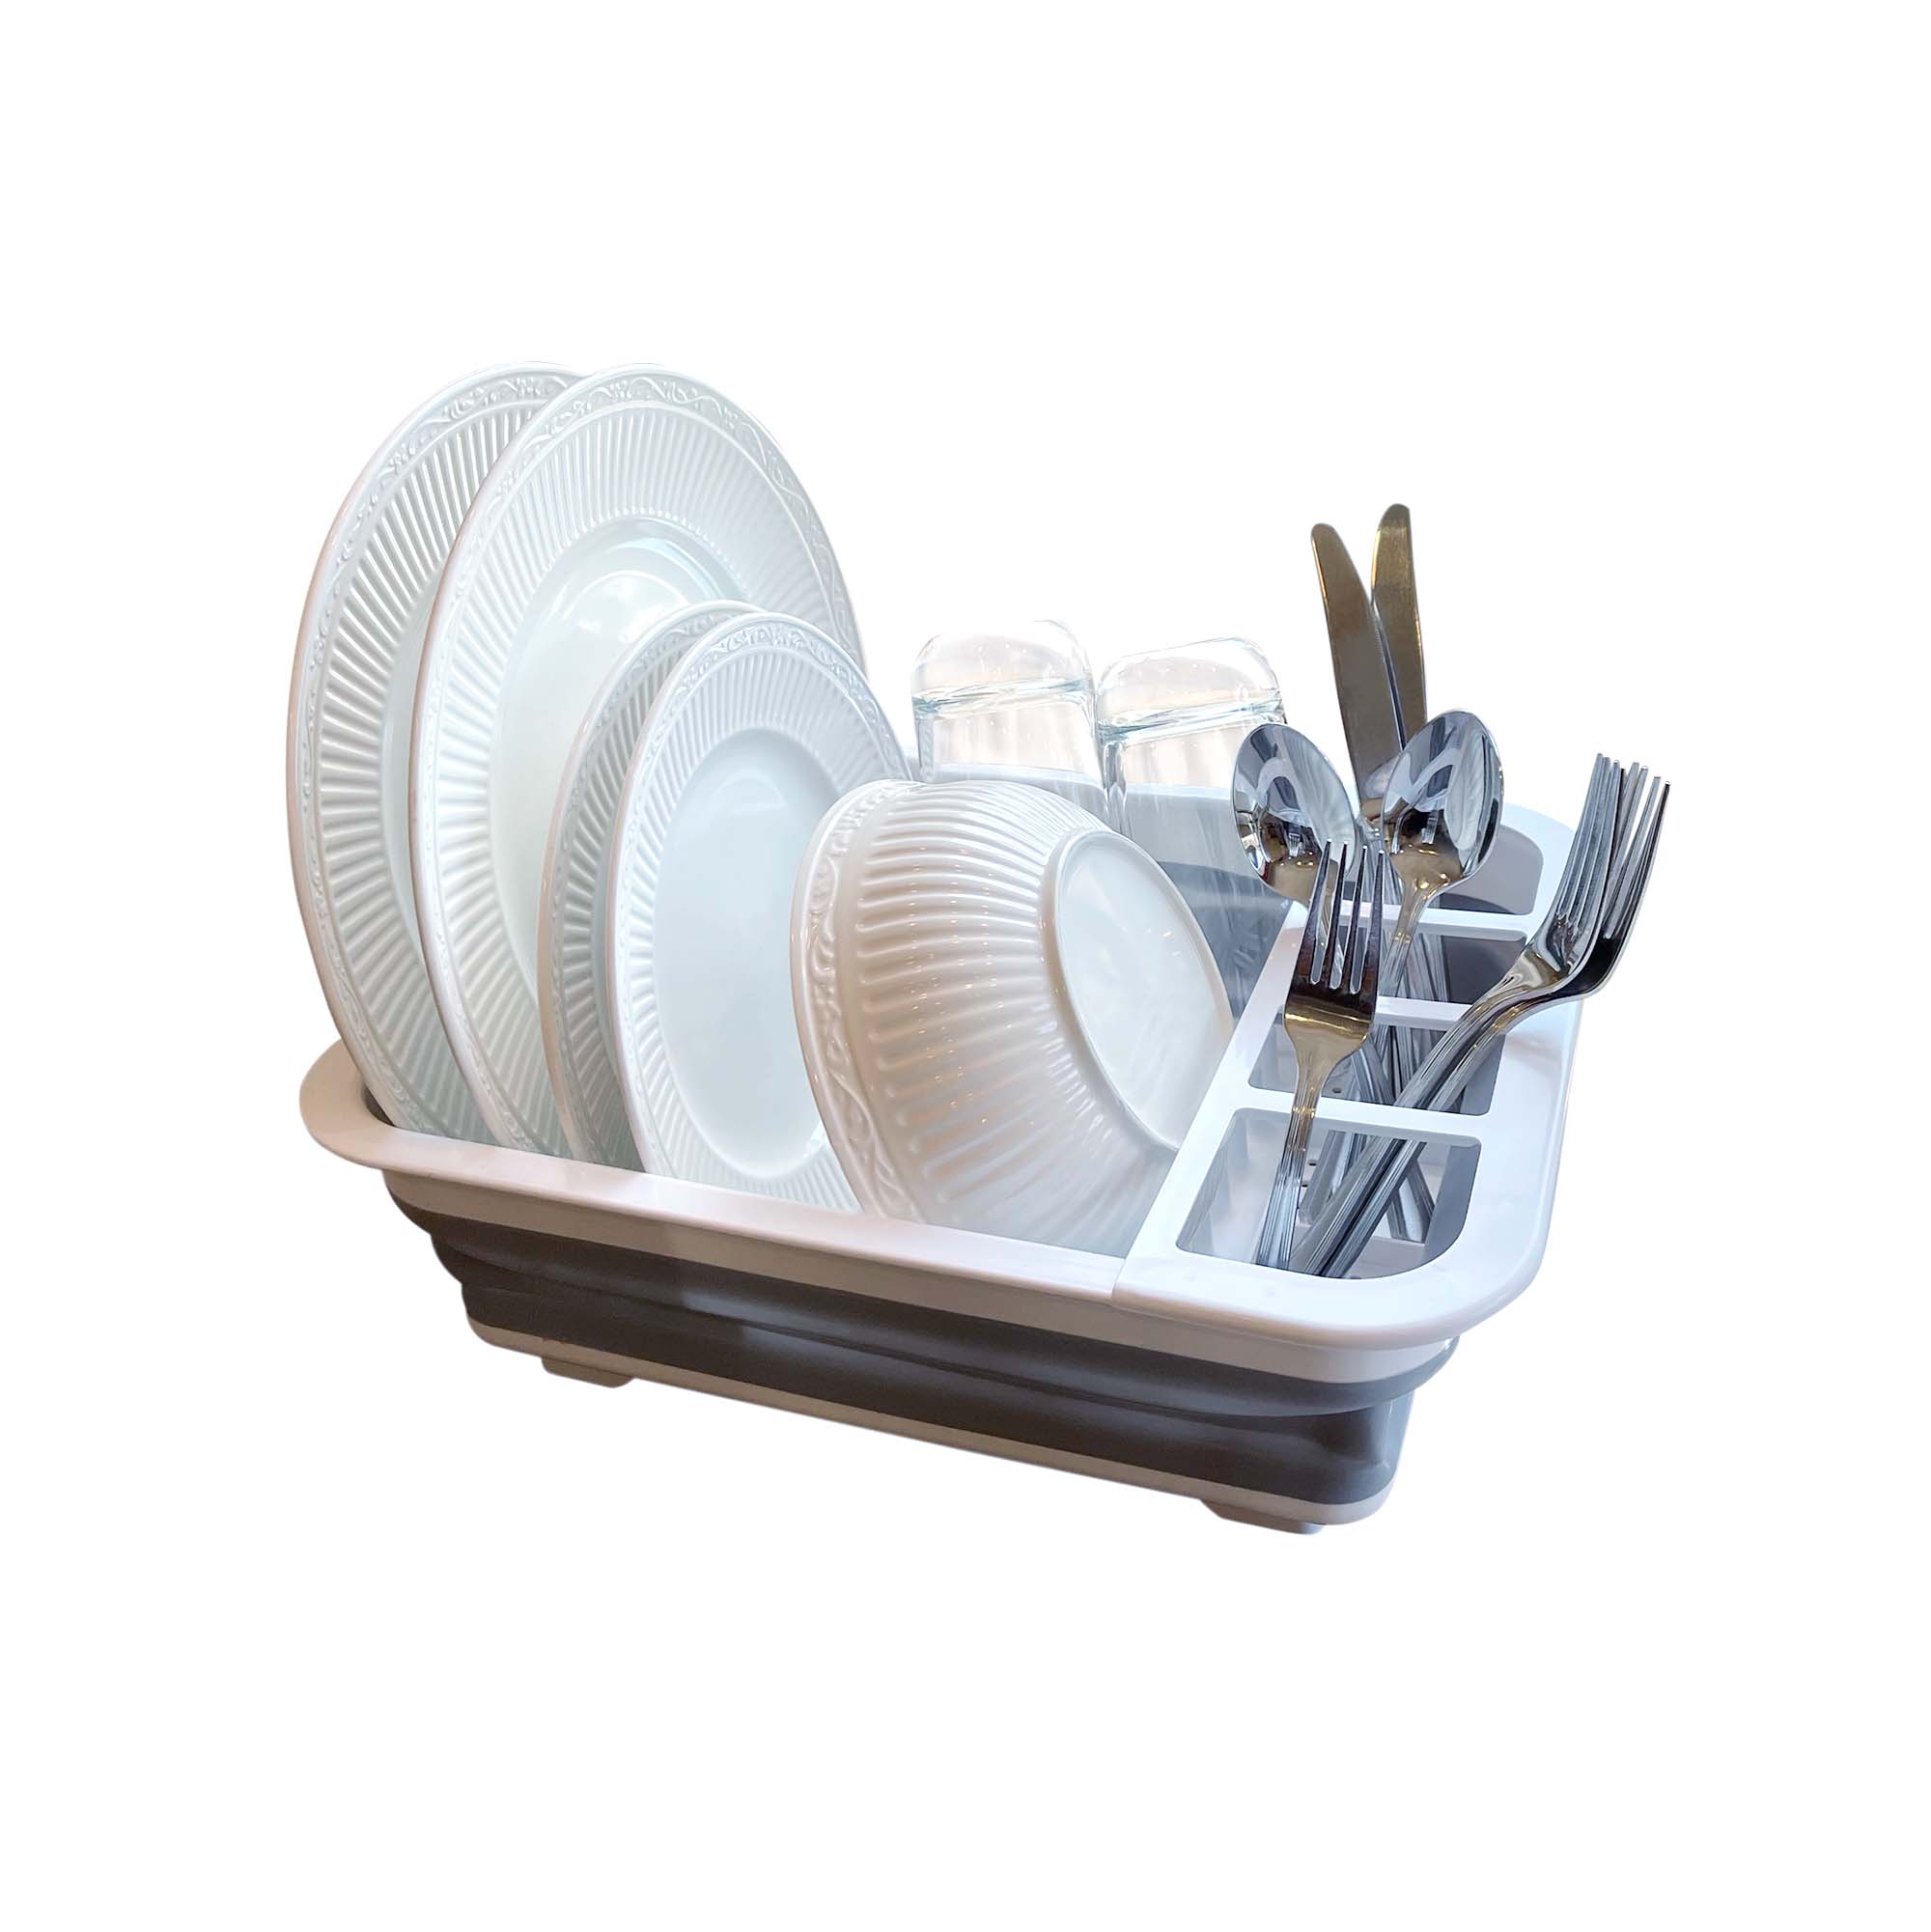  ZOUYO Collapsible Dish Drying Rack Portable Dish